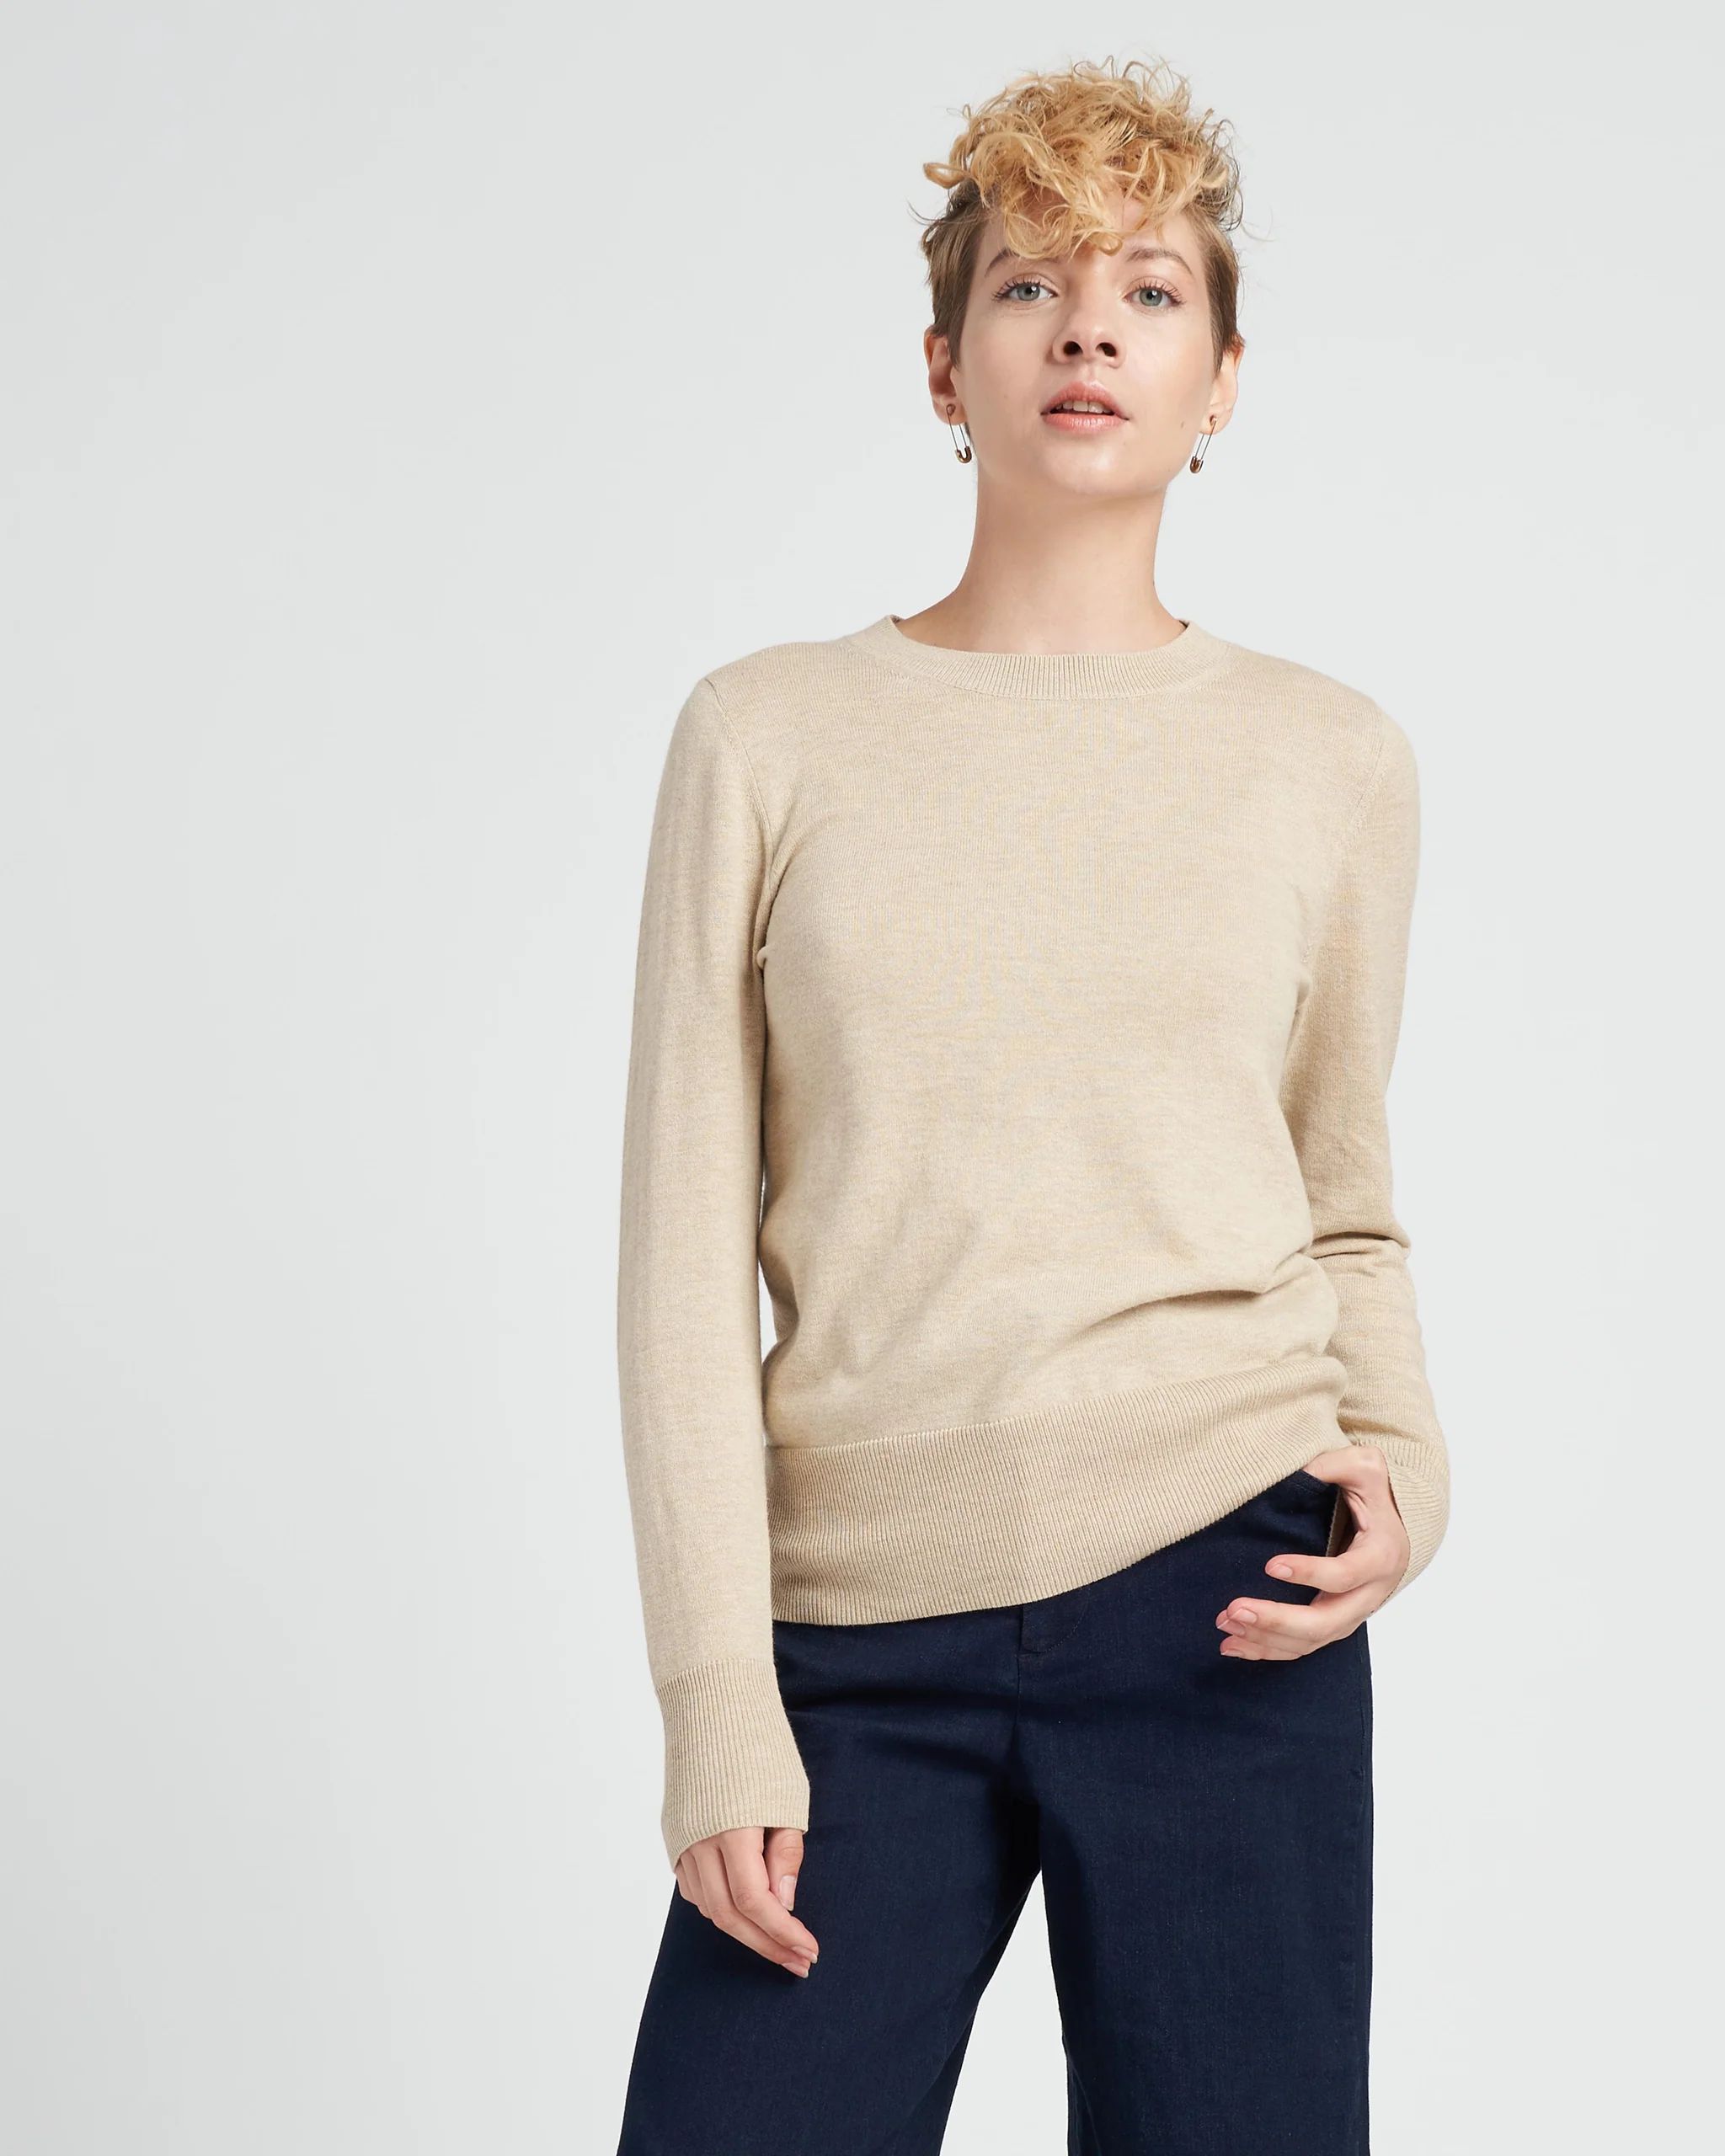 Chloe Crew Neck Sweater - Oatmeal | Universal Standard